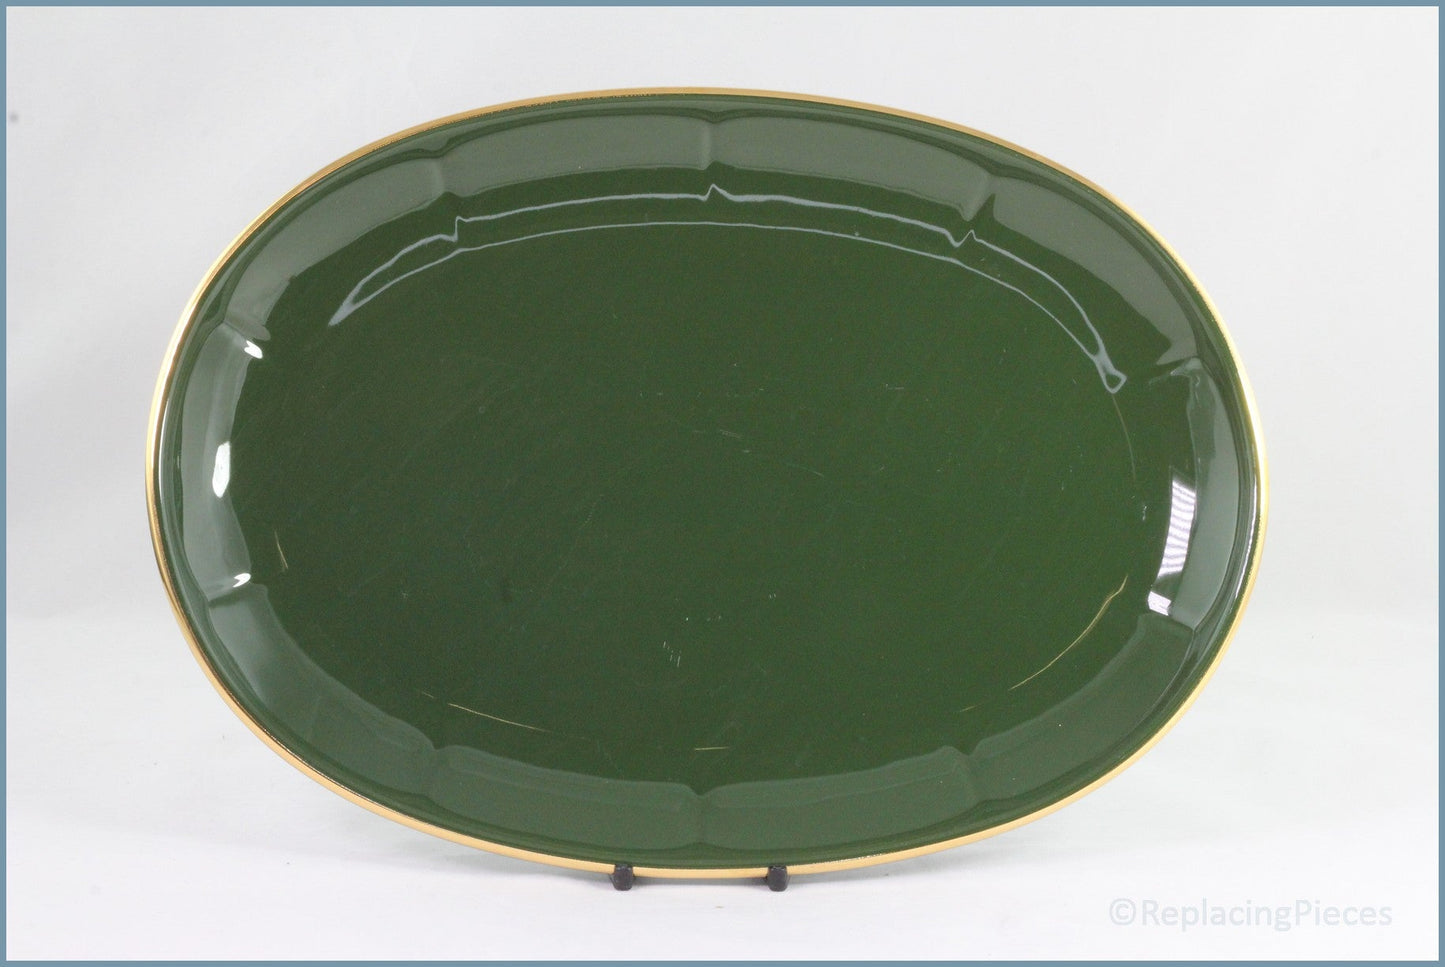 Apilco - Bistro (Green & Gold) - 11 7/8" Oval Platter